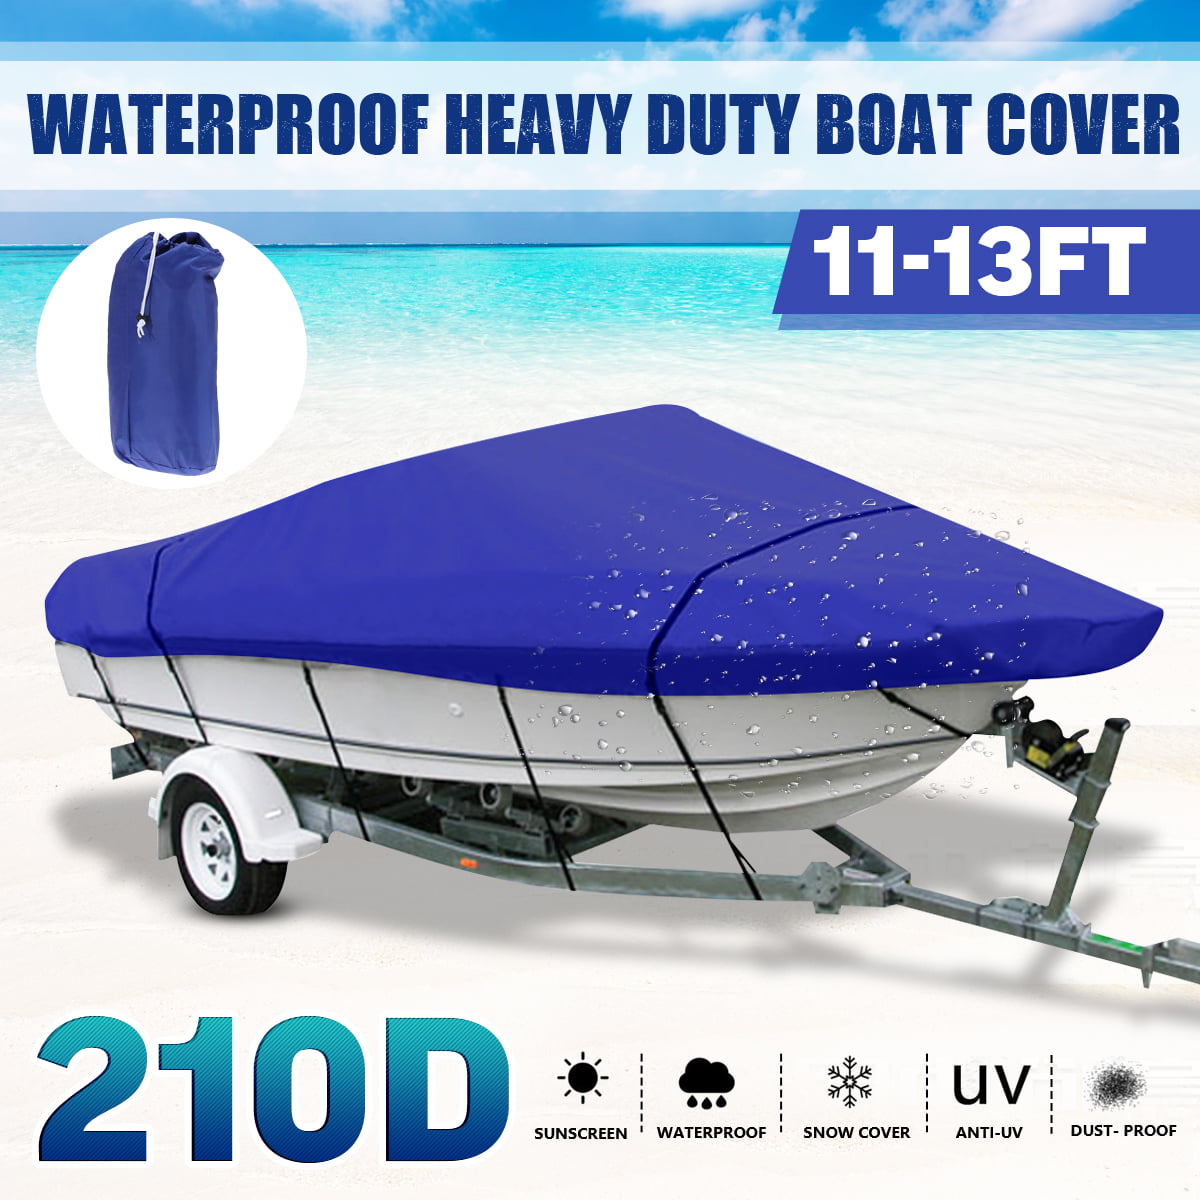 Premium 600D Pontoon Boat Cover For 20' 24' Long 102" Beam Motorboat Powerboat